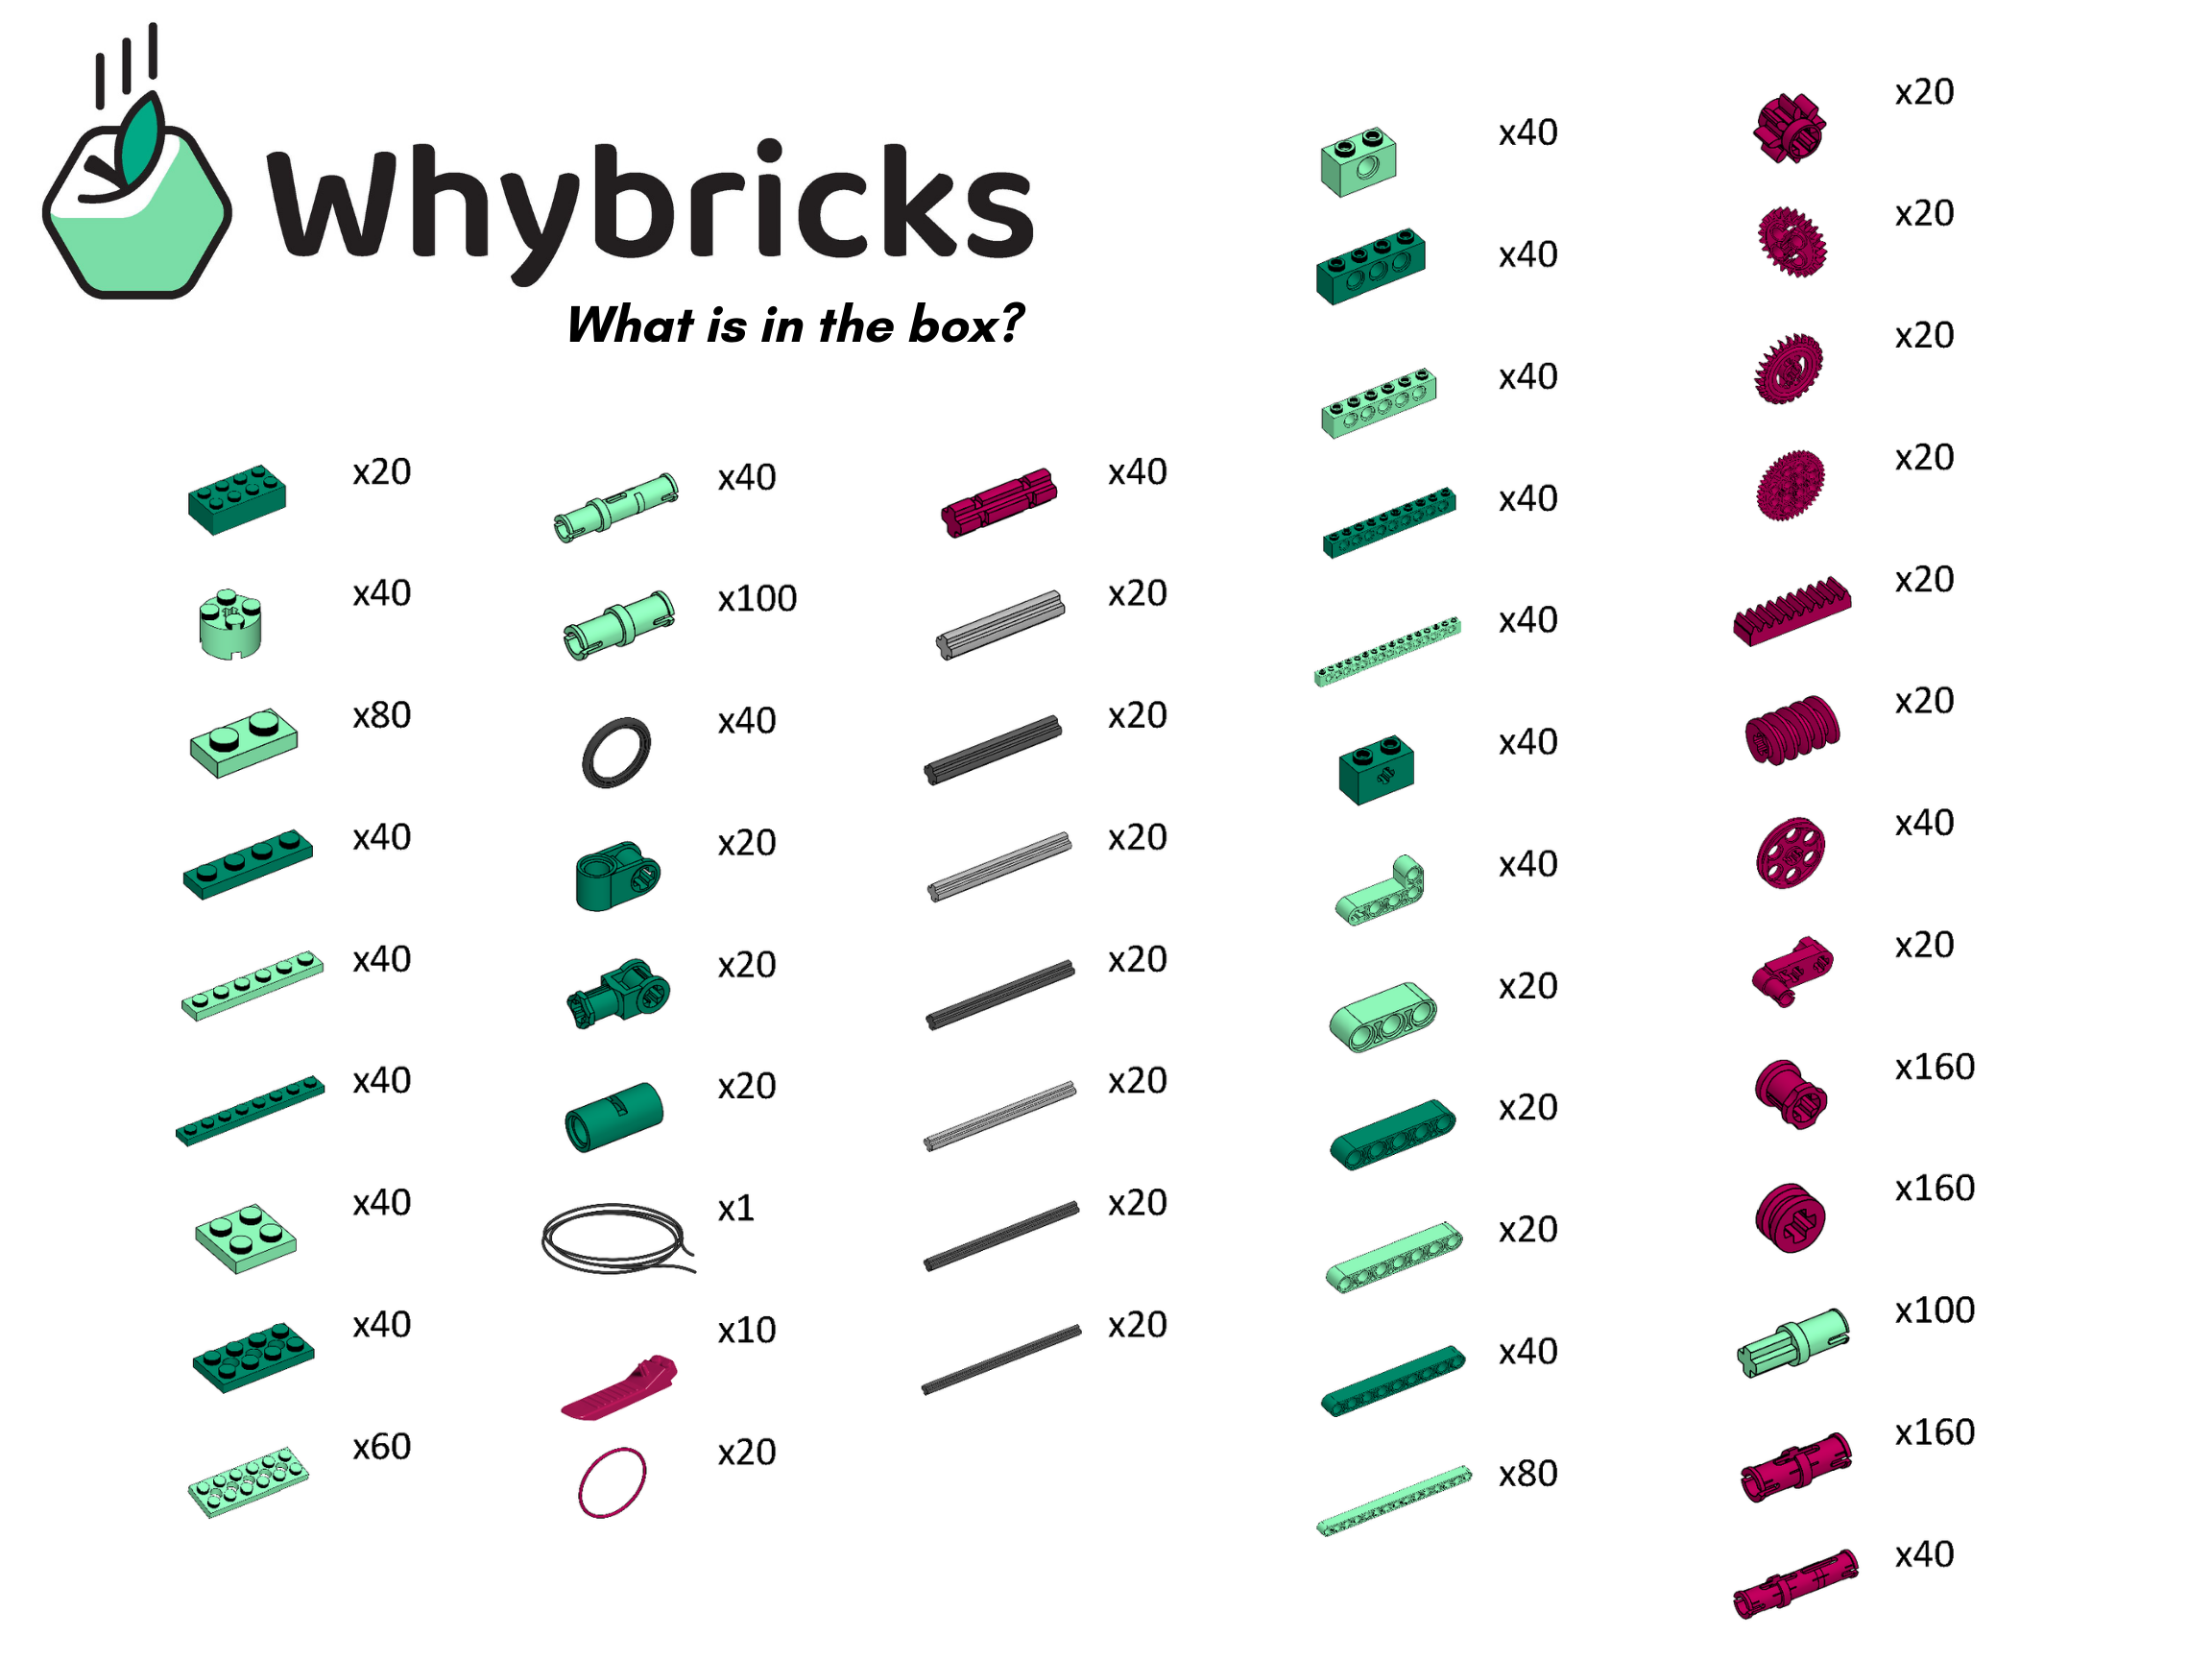 Whybricks Microbricks Content